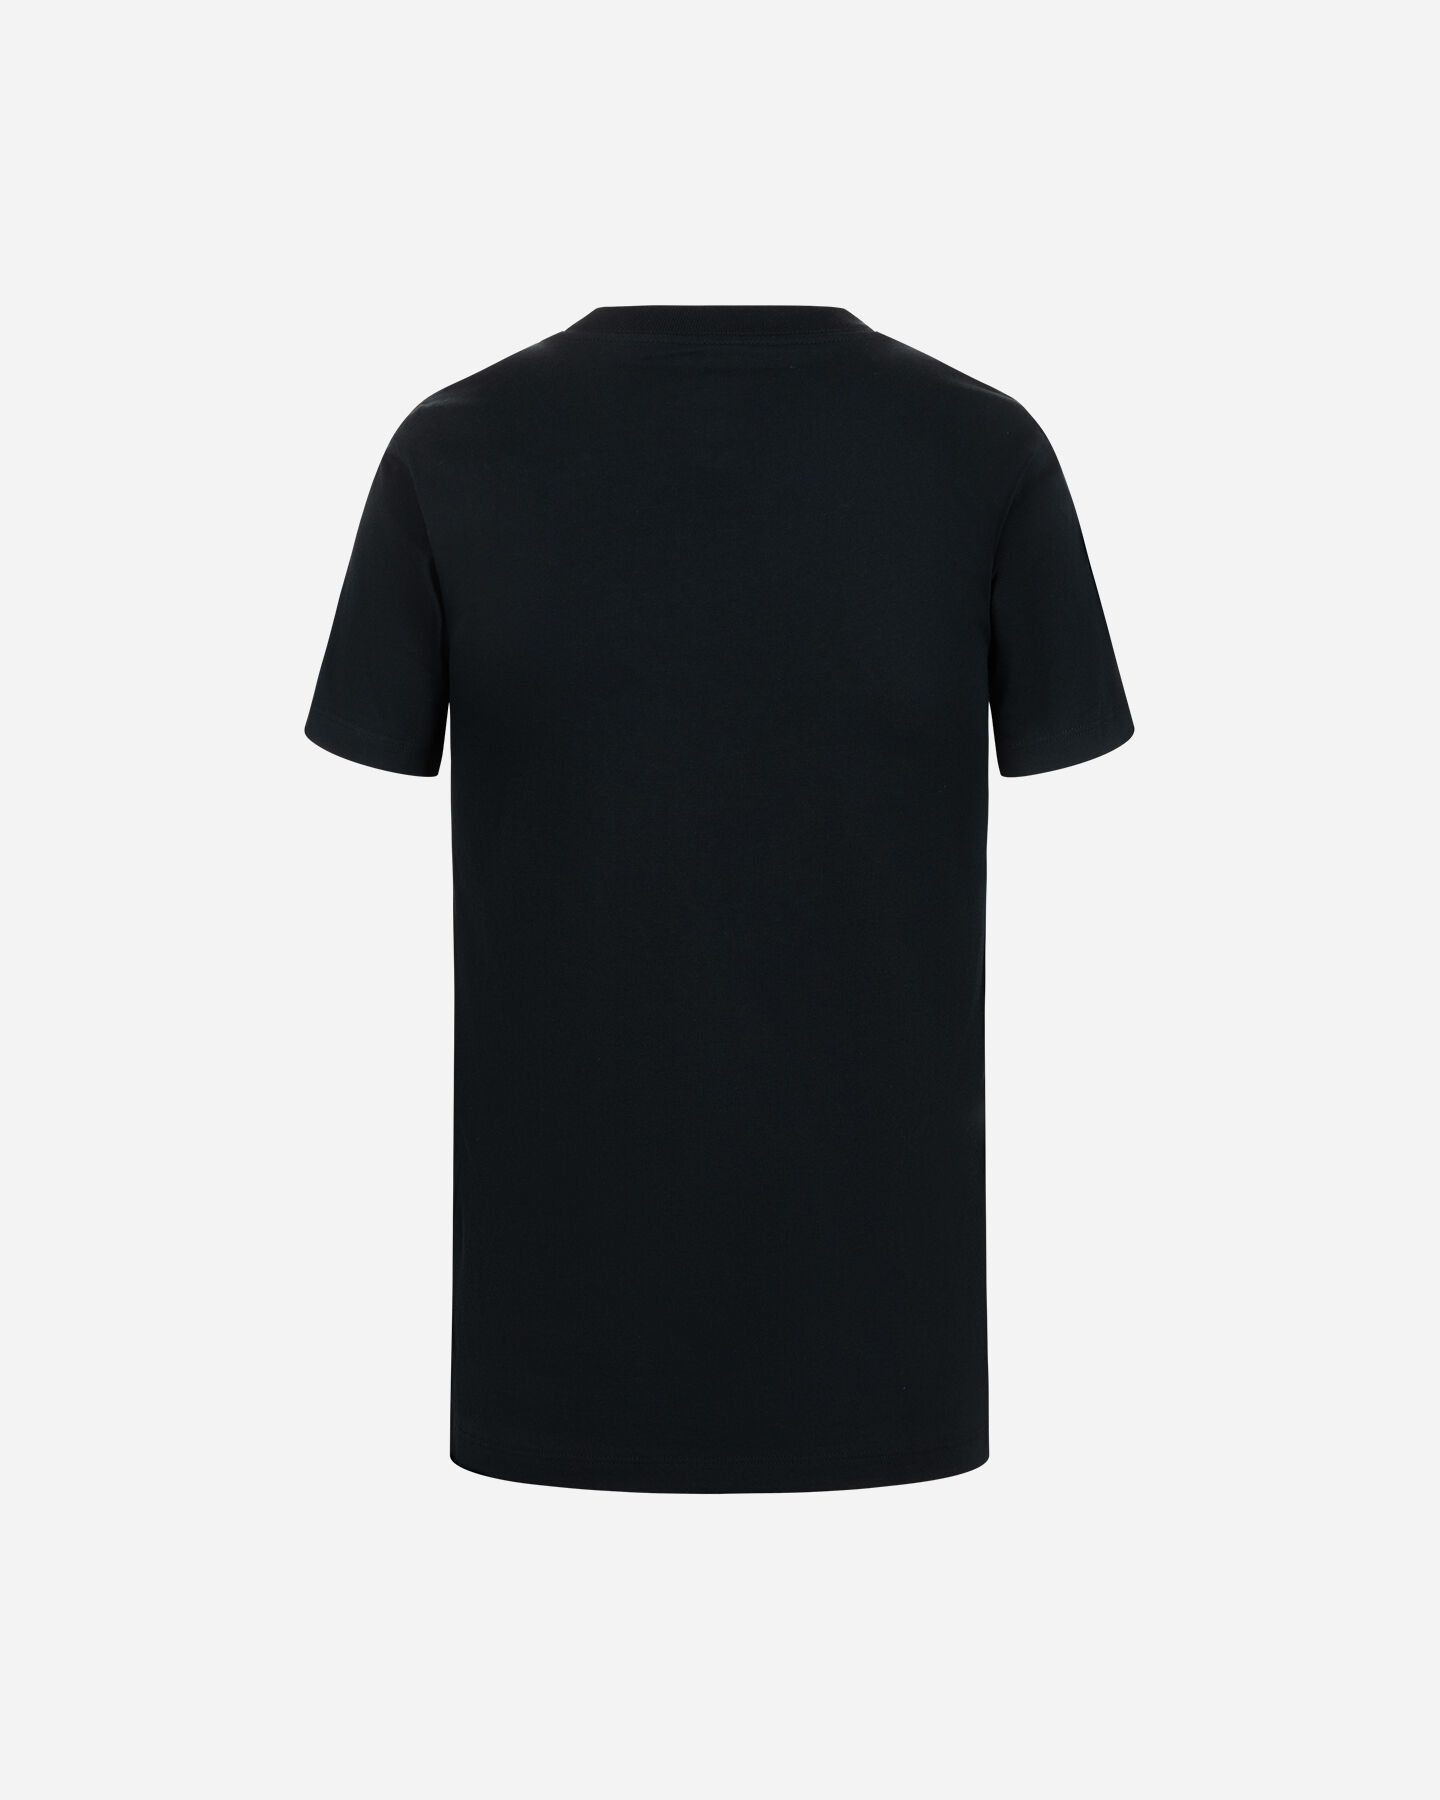  T-Shirt CONVERSE CHUCK REGULAR FIT W S5678977|001|XS scatto 1